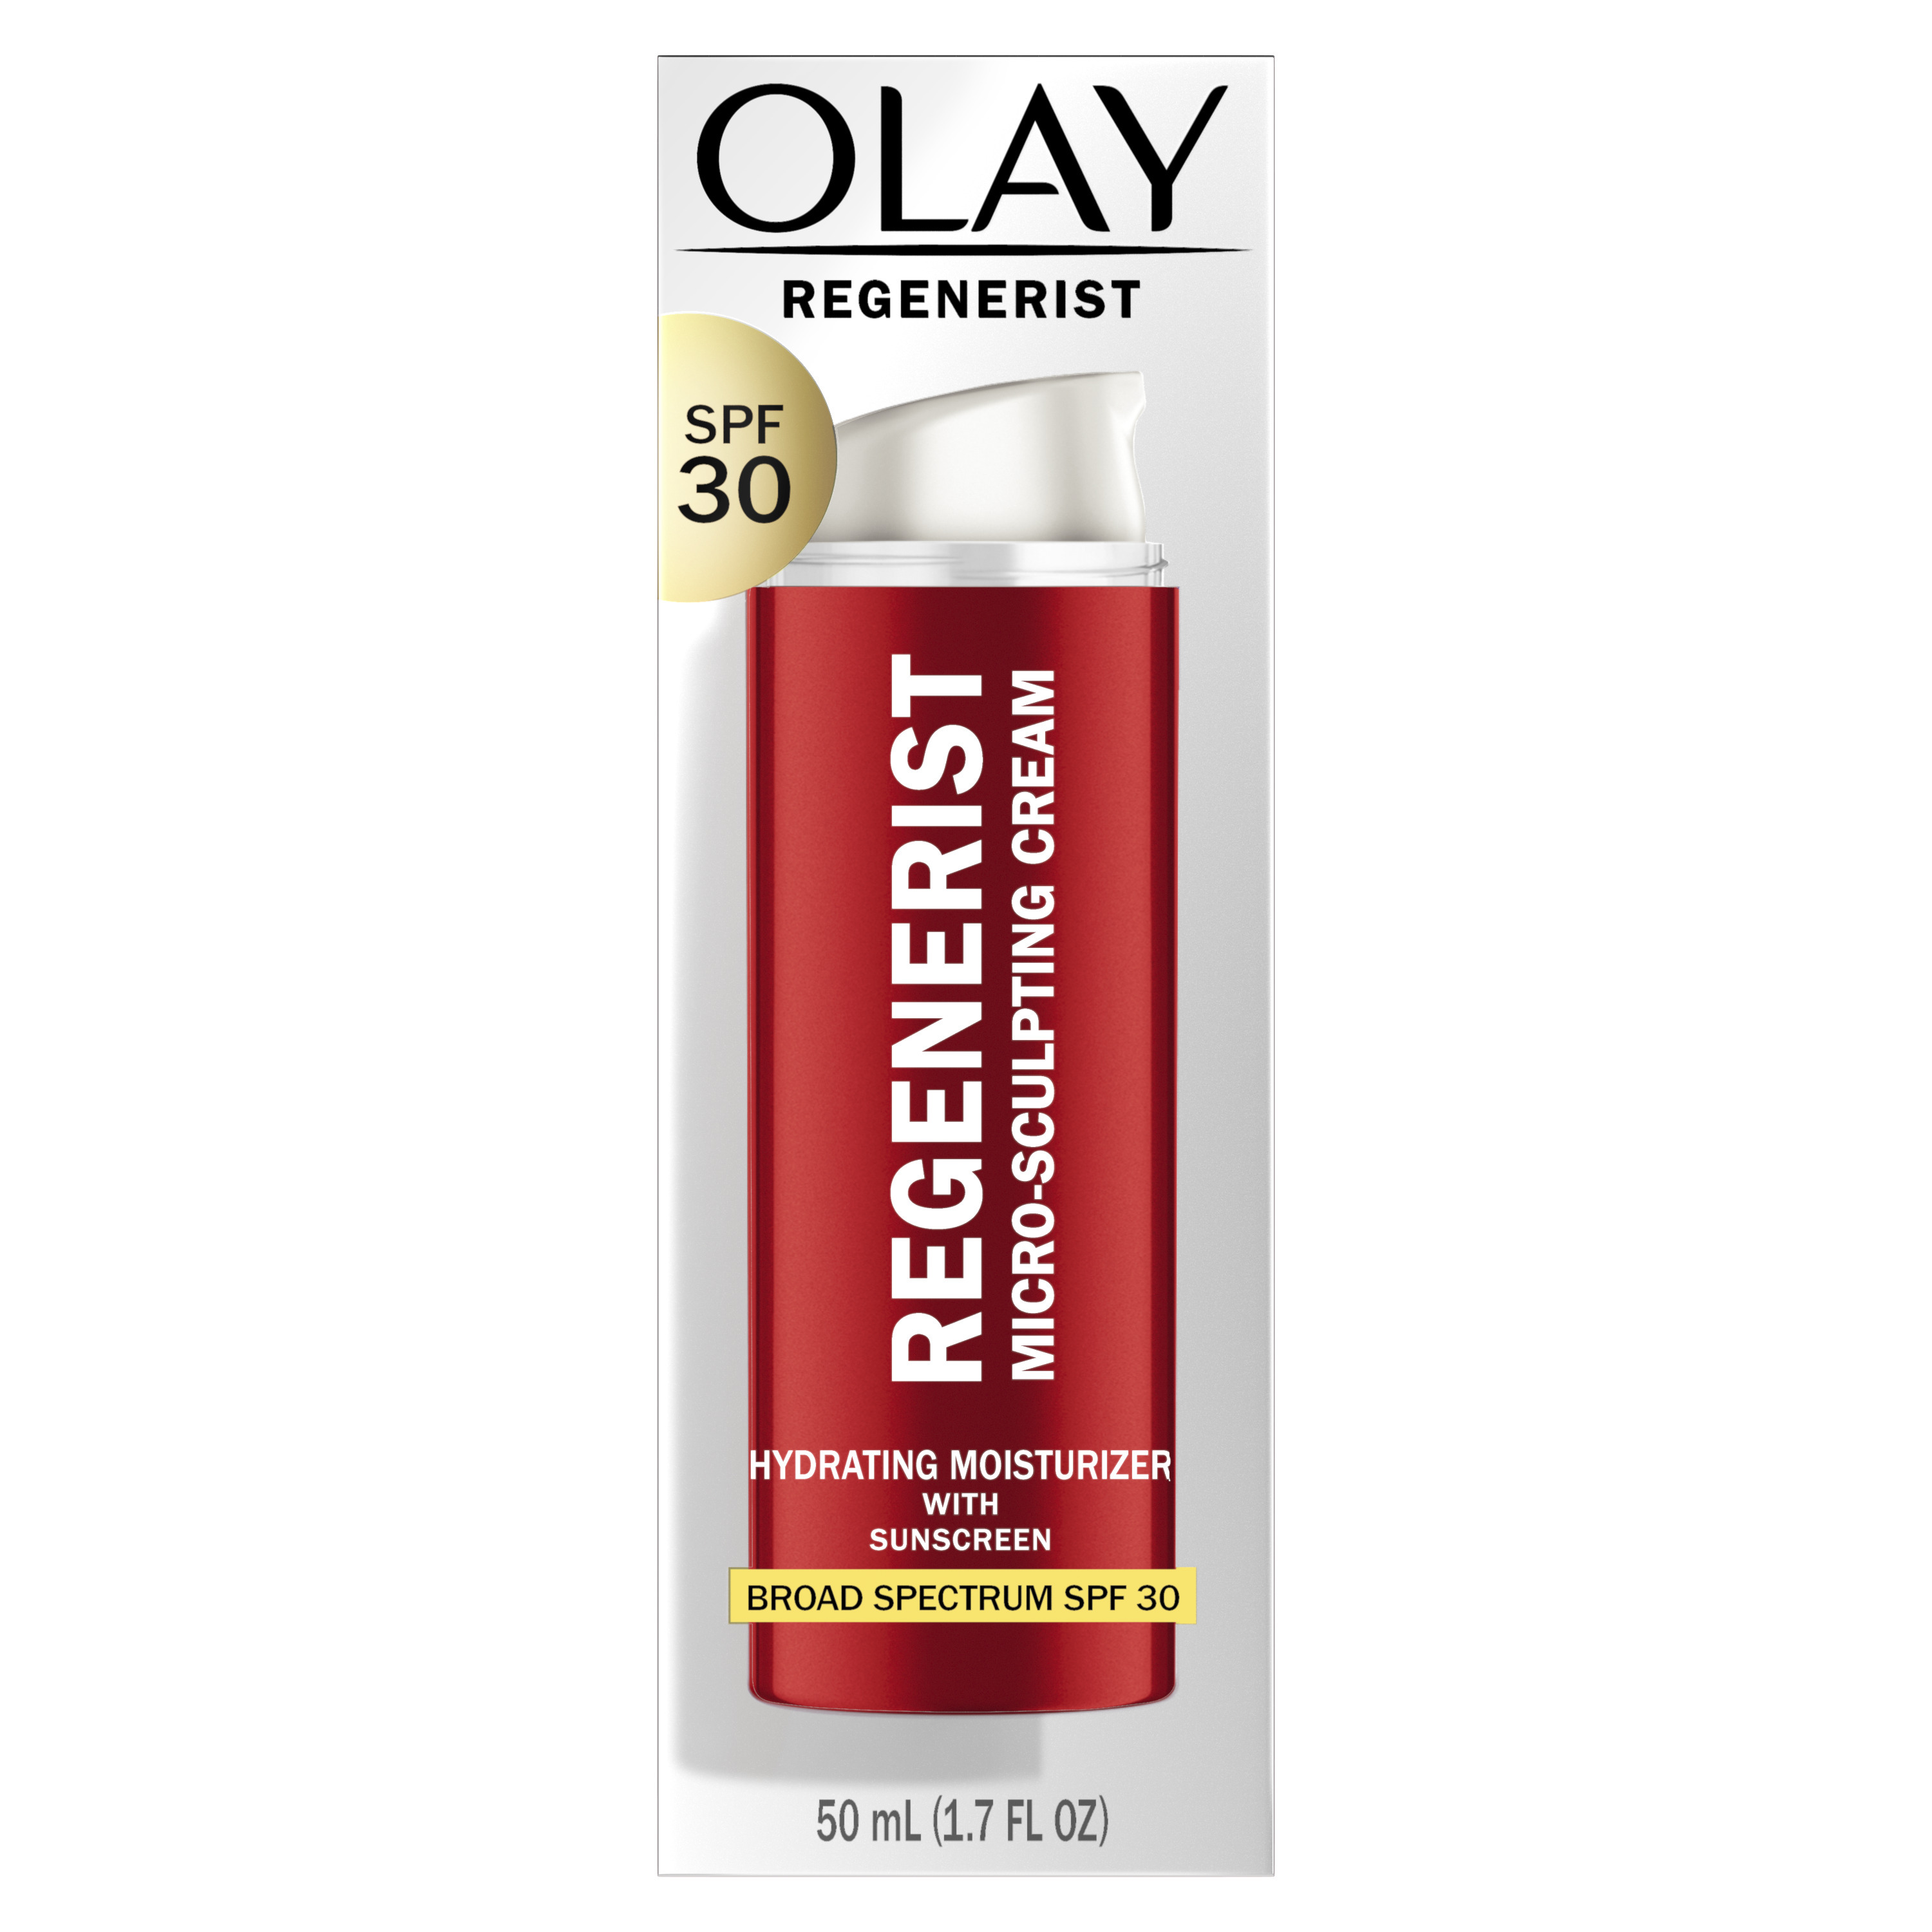 Olay Regenerist Micro-Sculpting Cream Moisturizer, SPF 30 Sun Protection for All Skin Types, 1.7 oz - image 3 of 11